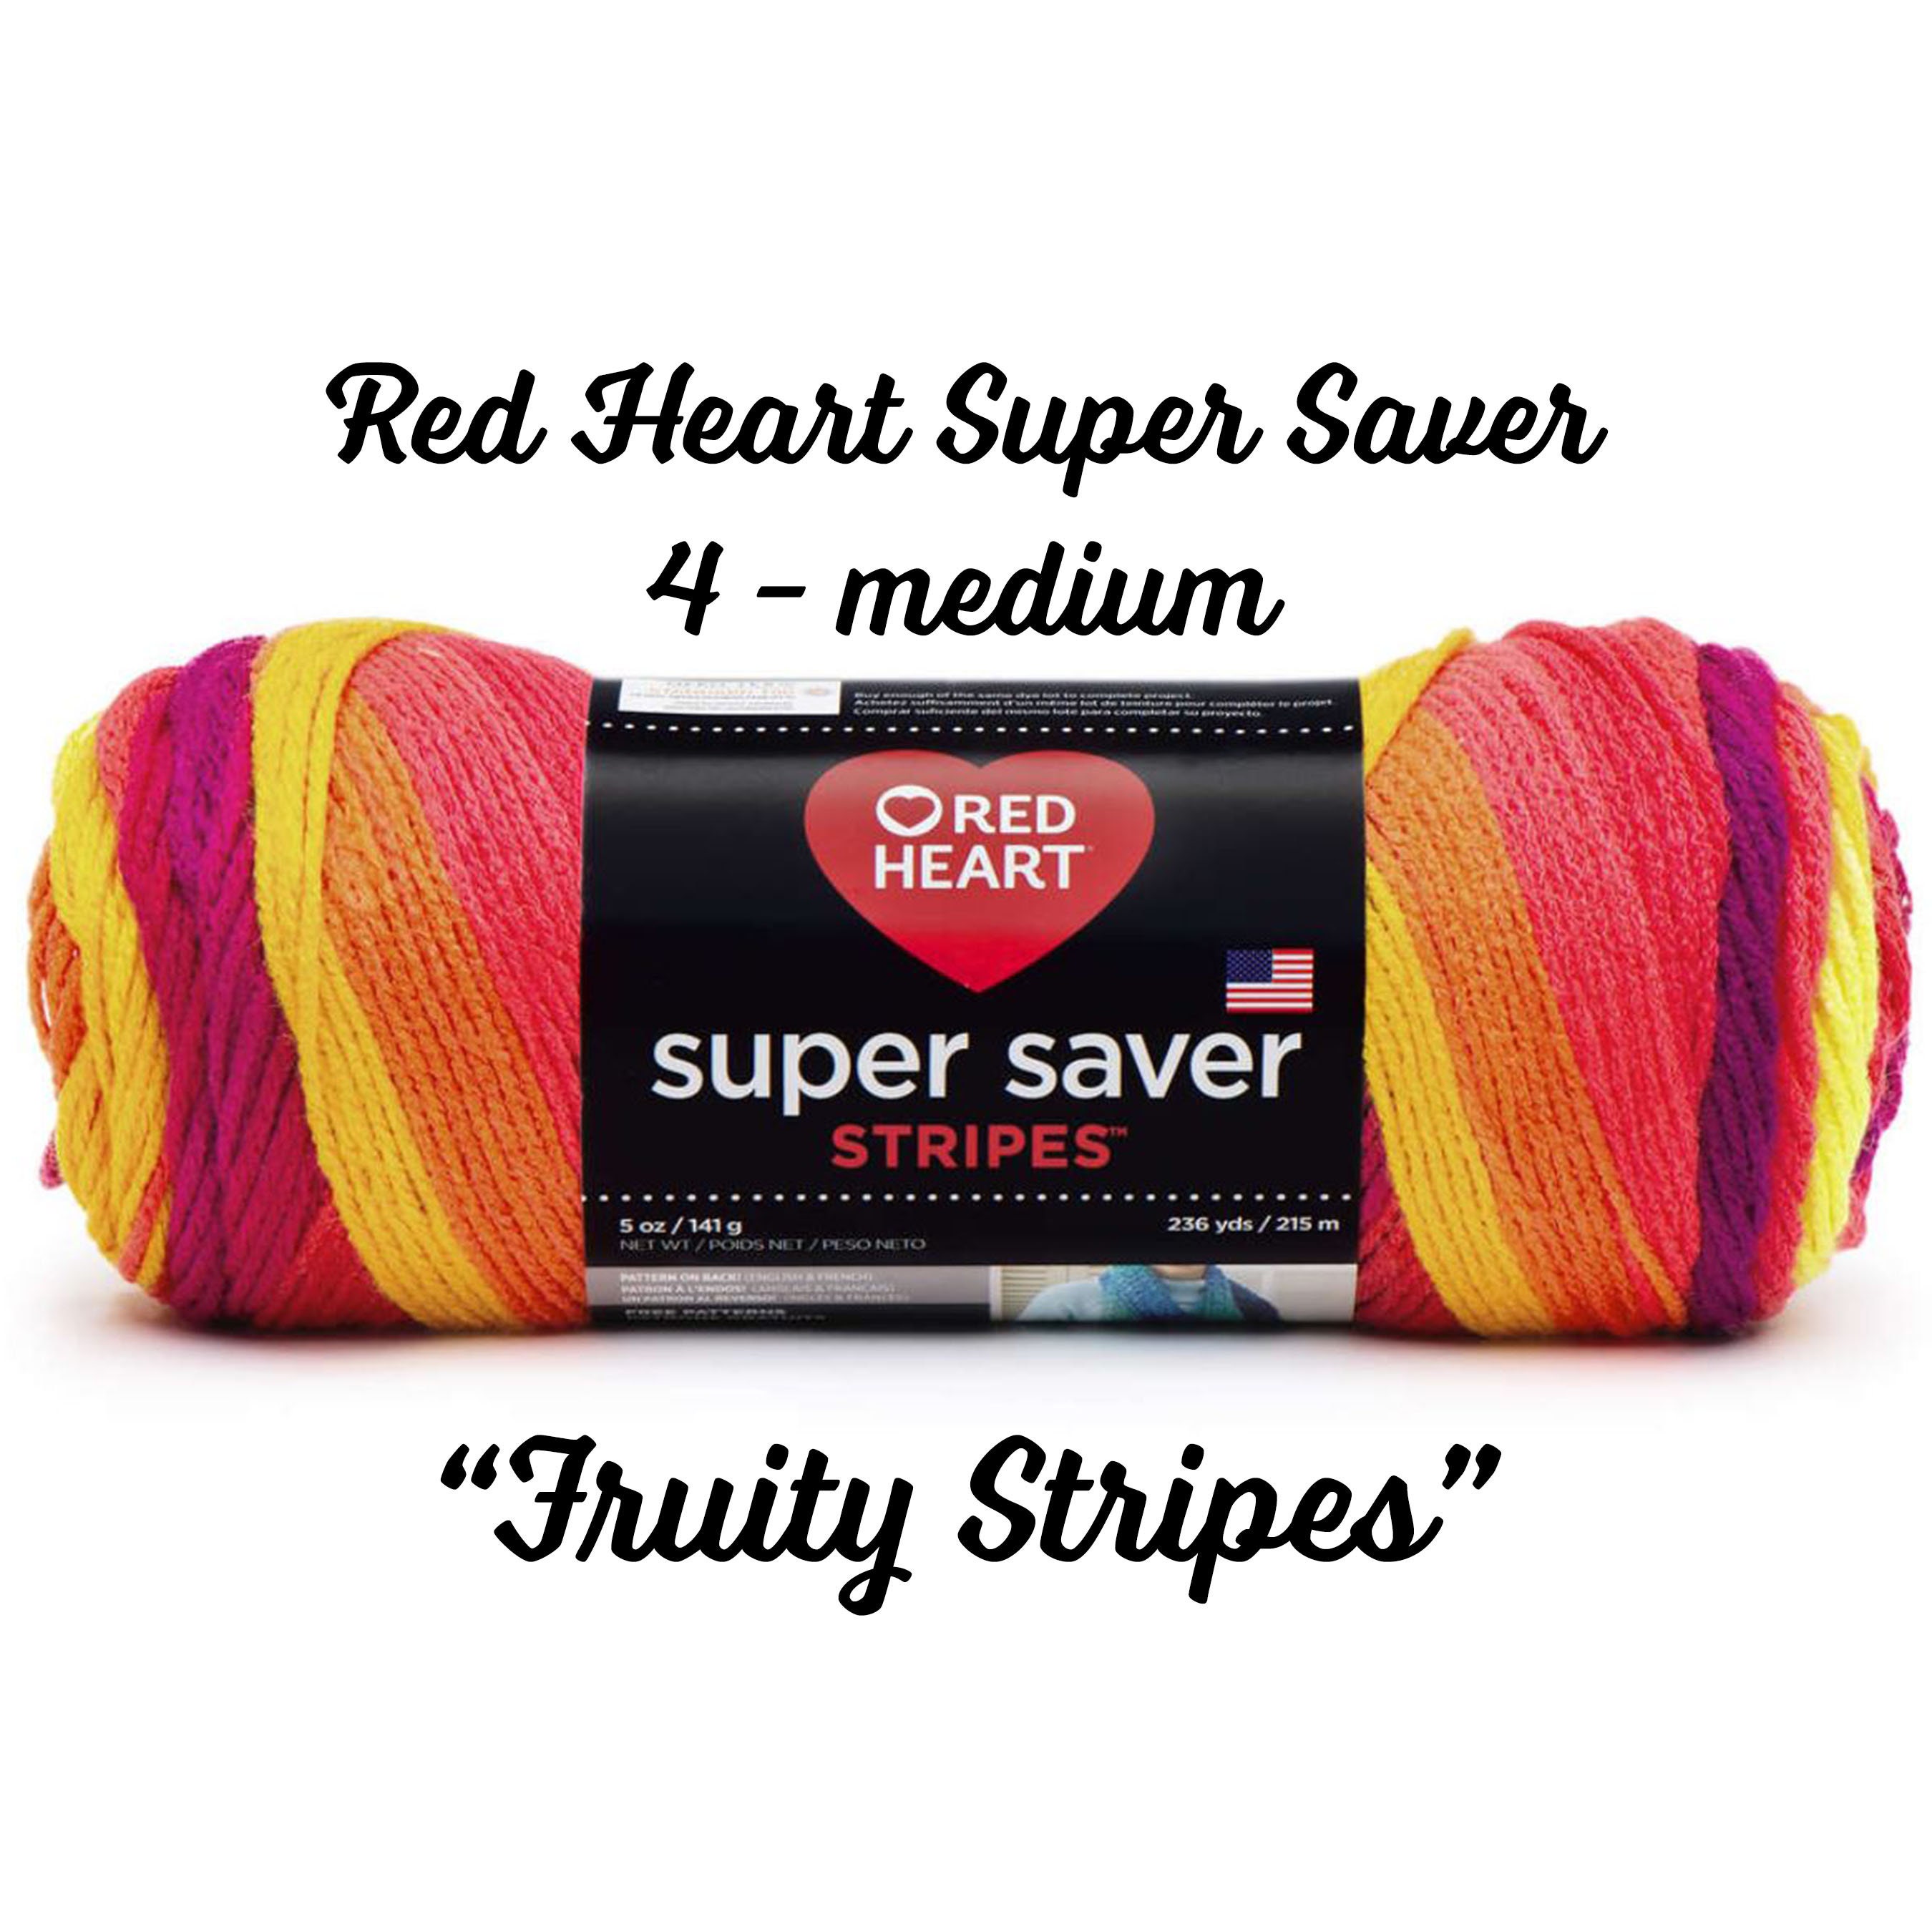 Red Heart Super Saver Color Block Yarn